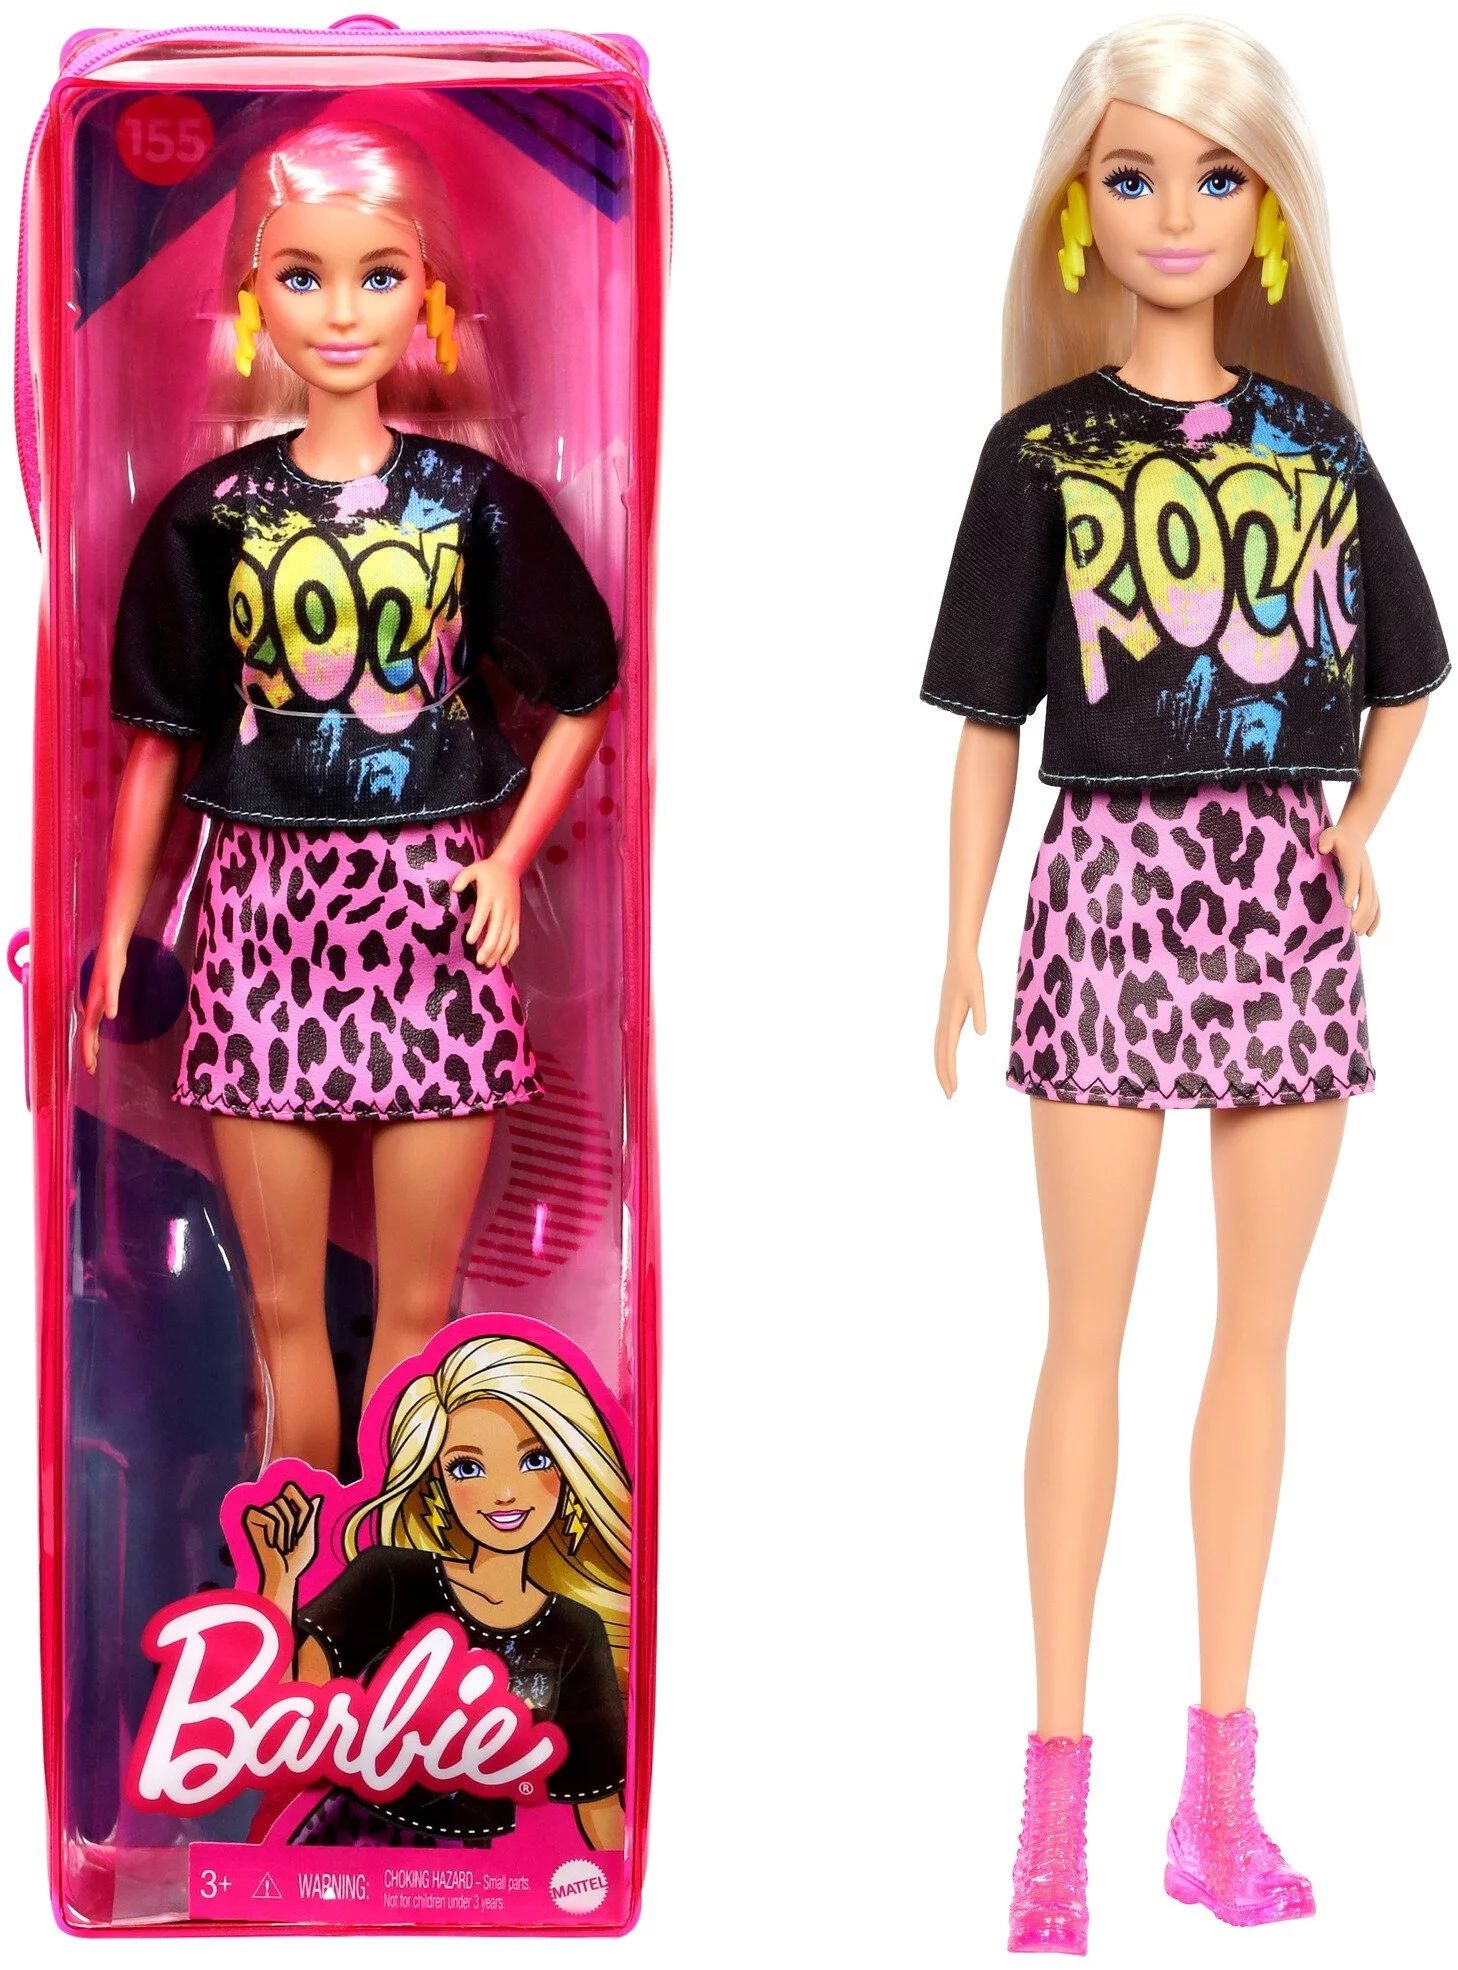 Barbie Fashionistas Doll #155 with Long Blonde Hair Wearing “Rock” Graphic T-Shirt, Animal-Pr... | Walmart (US)